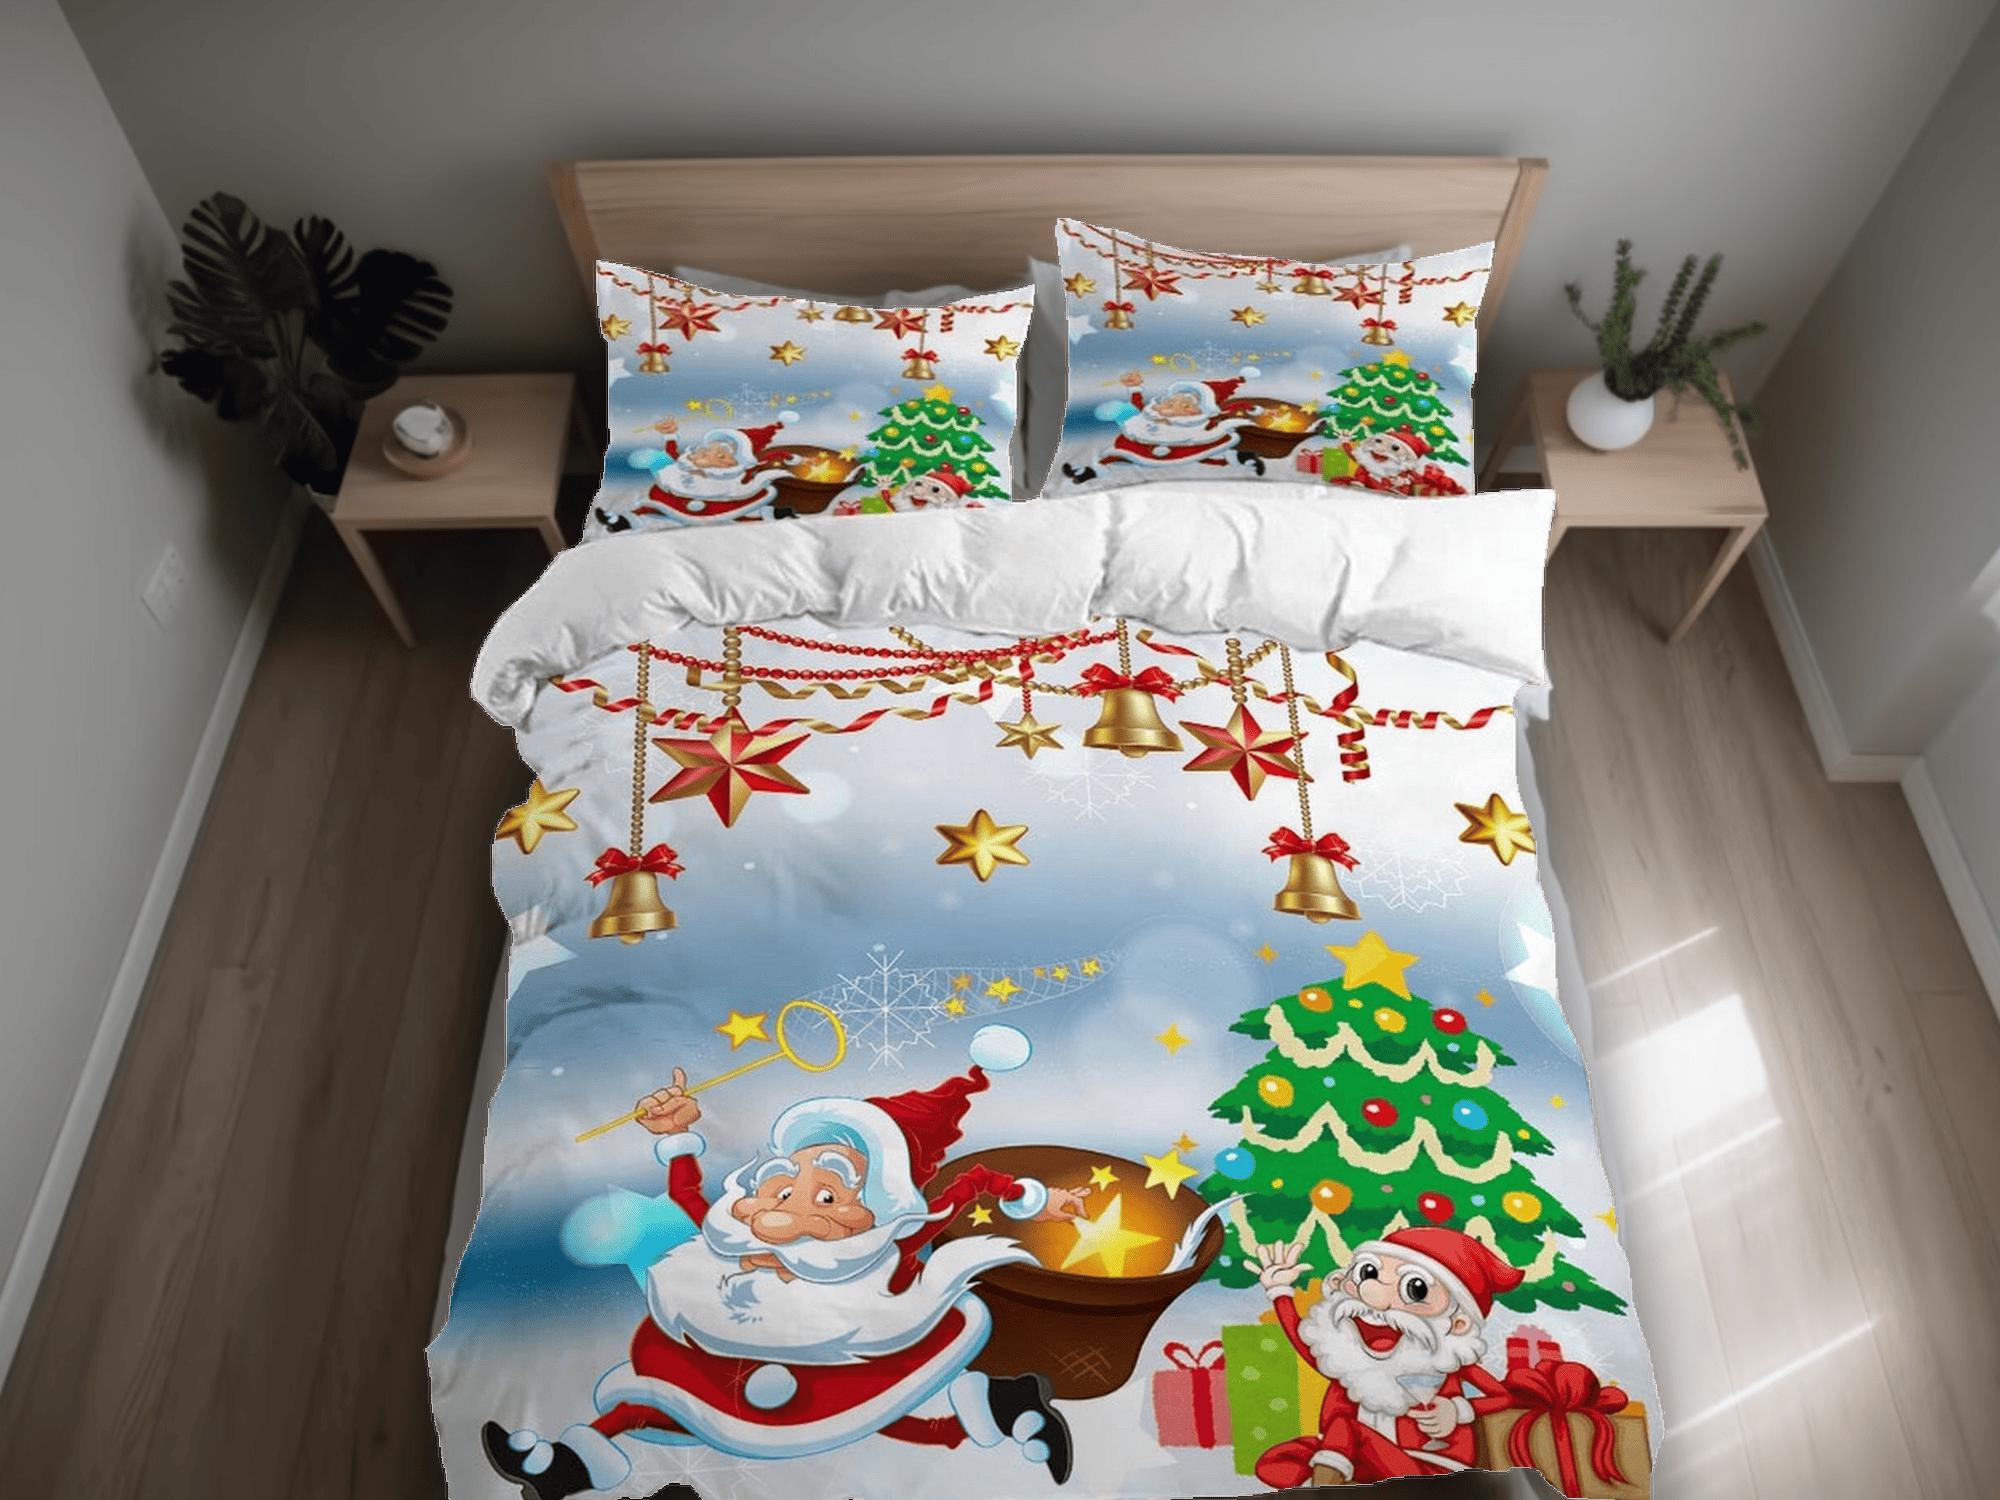 daintyduvet Magical Santa Claus Christmas bedding & pillowcase holiday gift duvet cover king queen full twin toddler bedding baby Christmas farmhouse